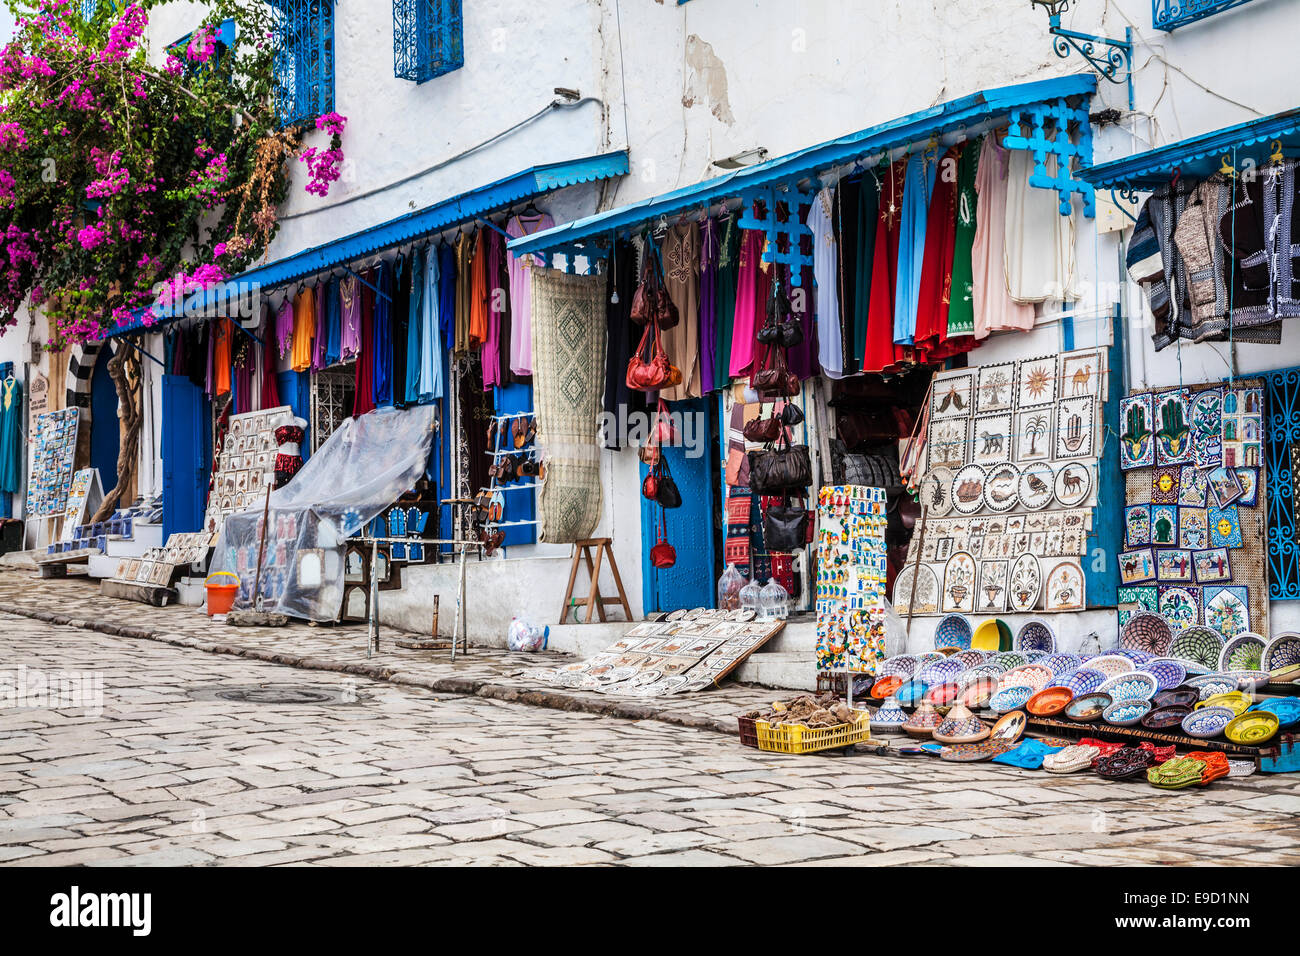 Traditional Tunisian souvenirs along the main street in Sidi Bou Said, Tunisia. Stock Photo